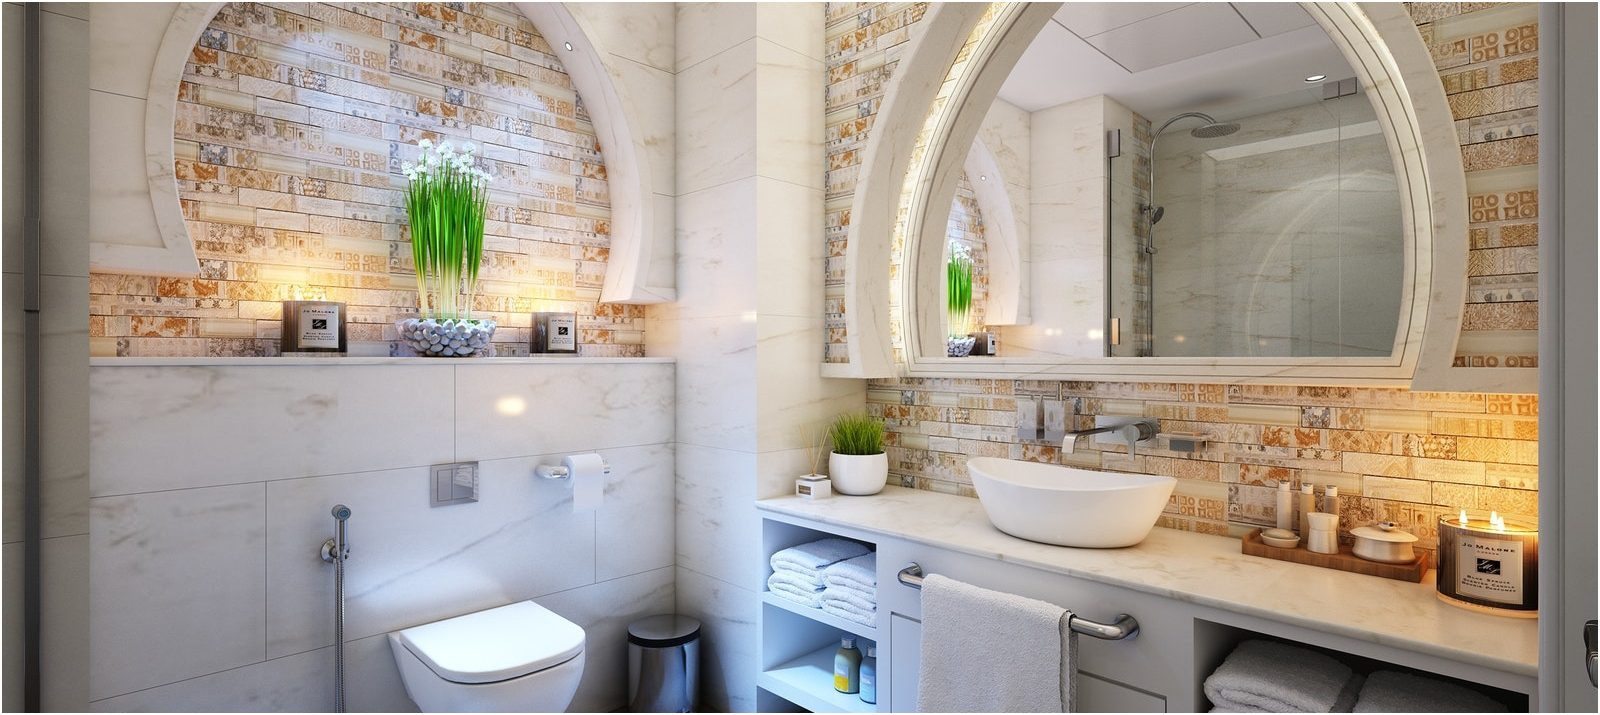 Inspirational Storage Ideas for Bathroom with Pedestal Sink